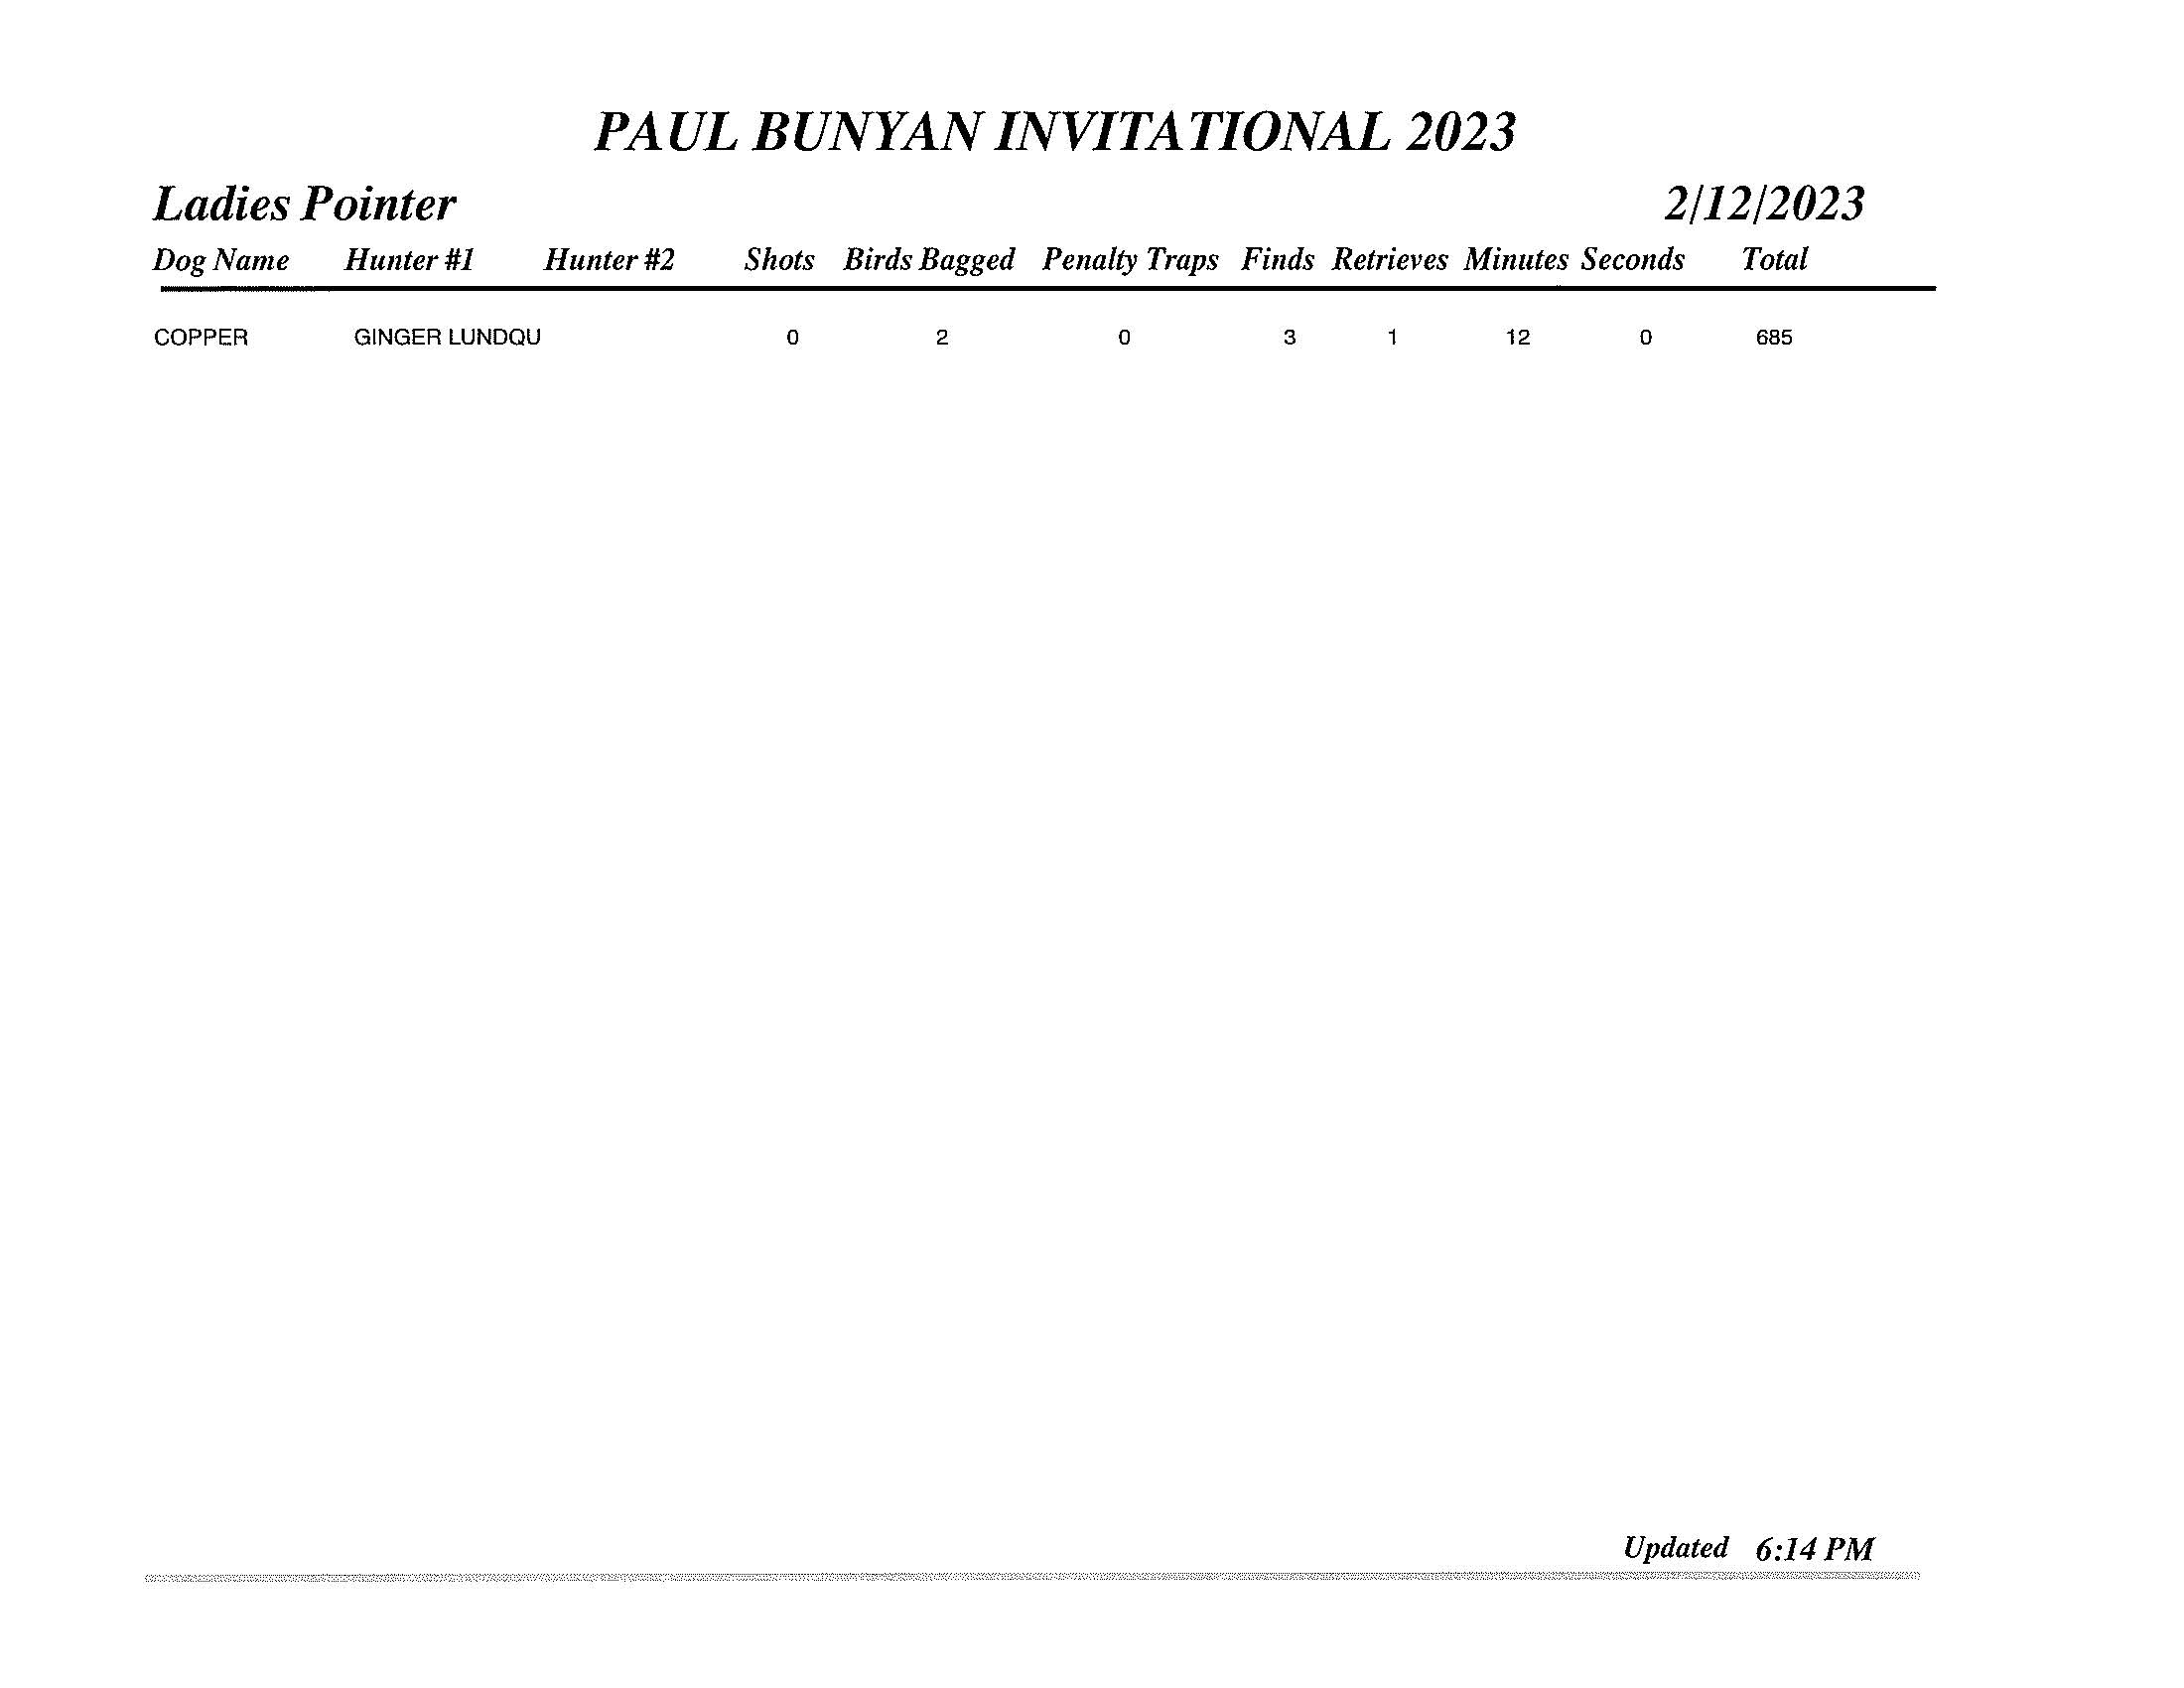 GDC Paul Bunyan Final 2023 (4)